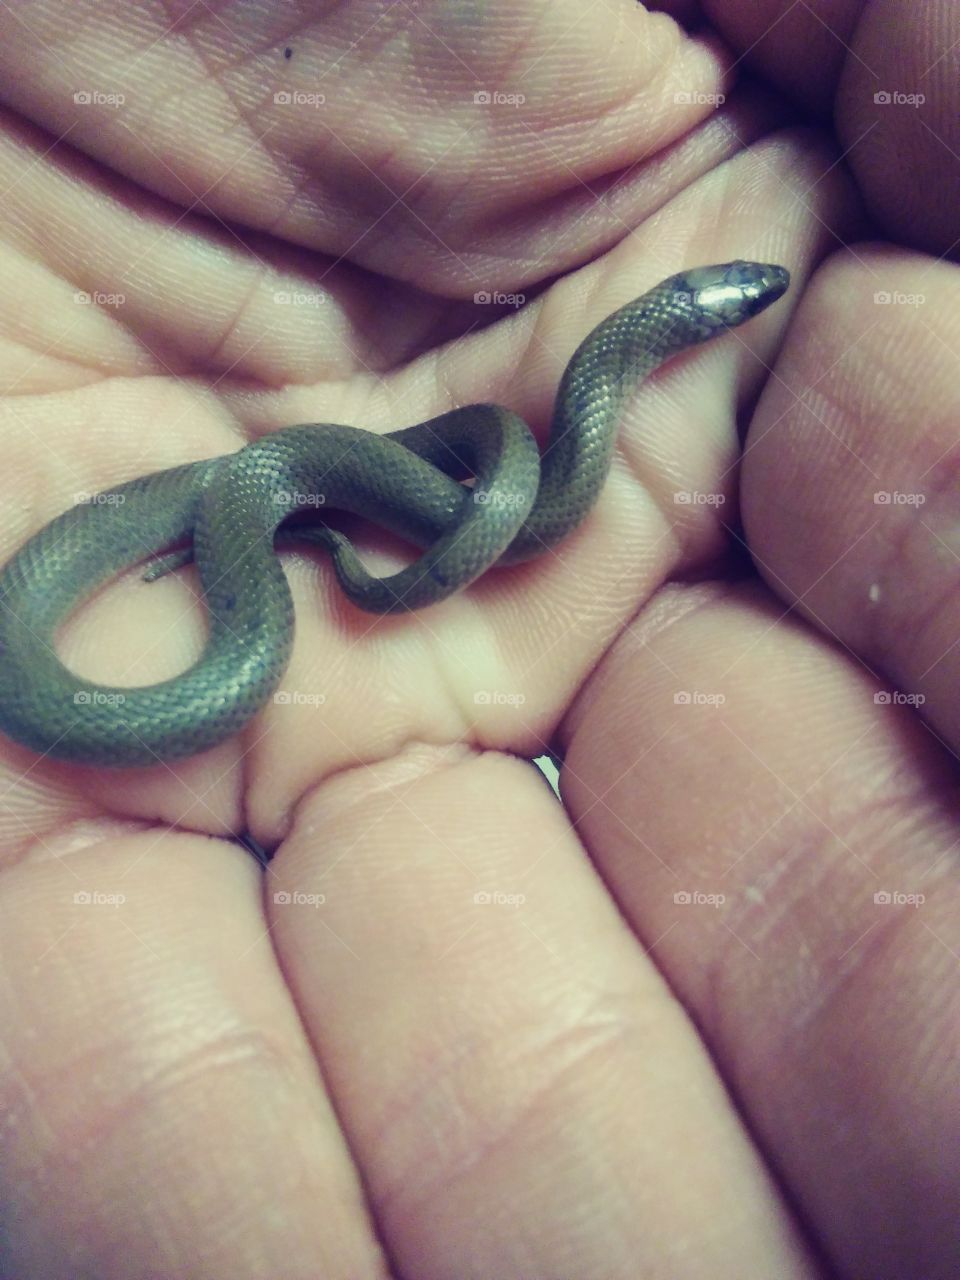 grass snake baby